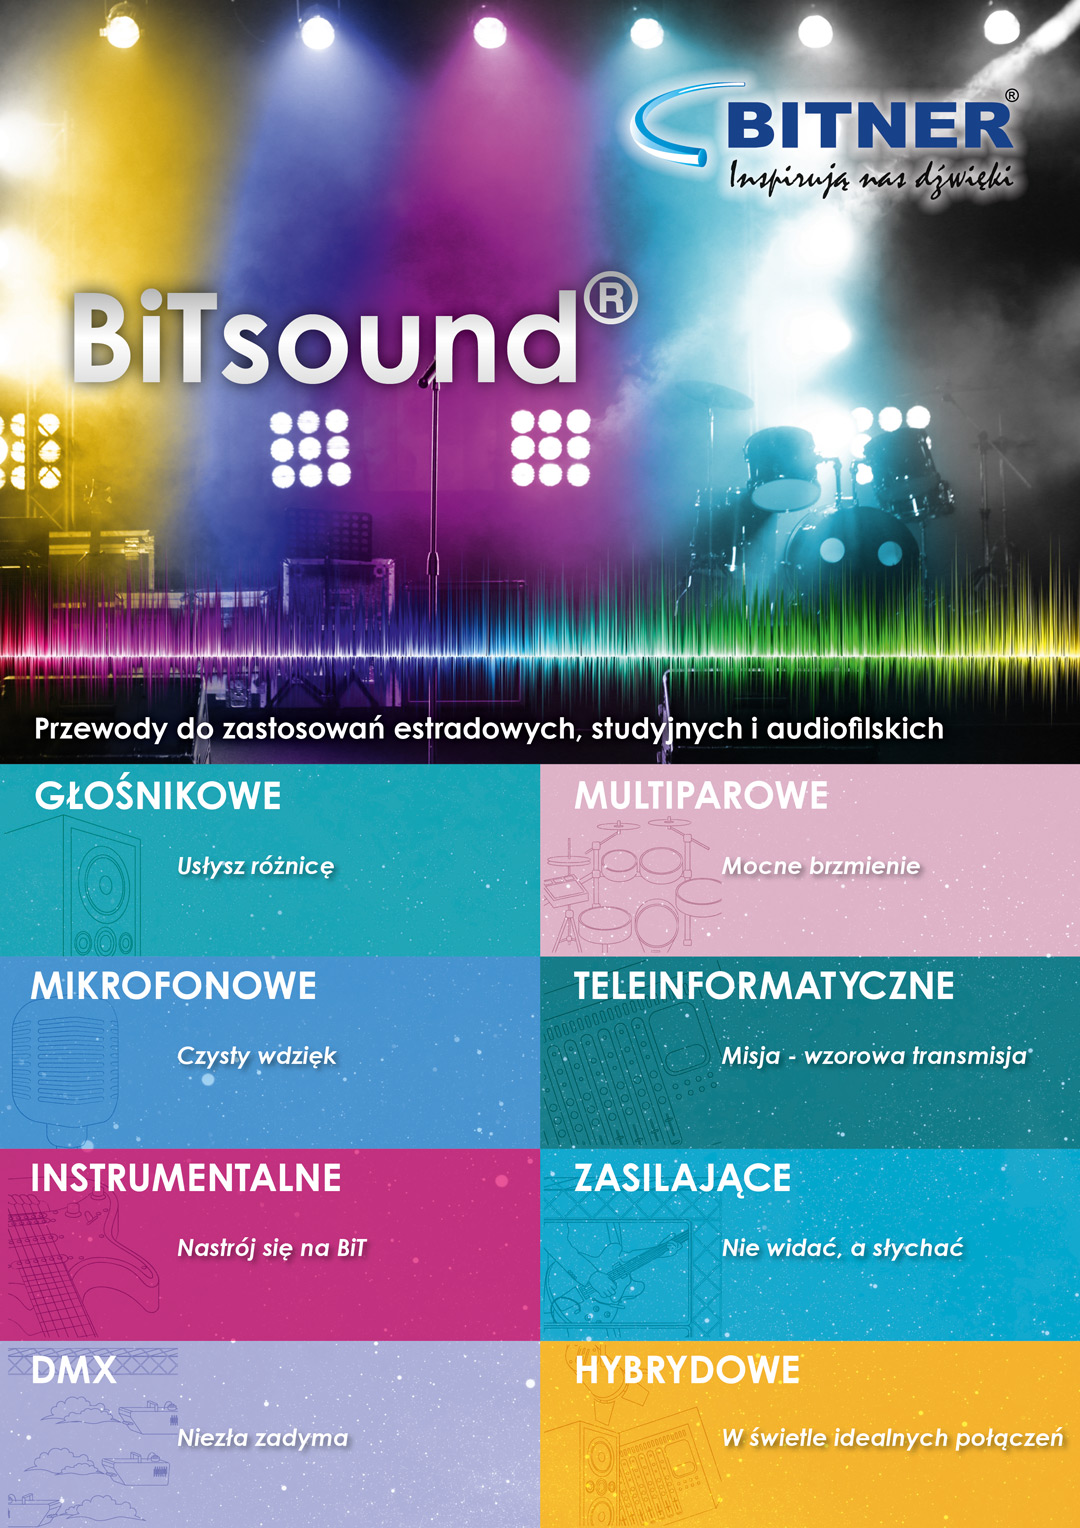 BiTsound®